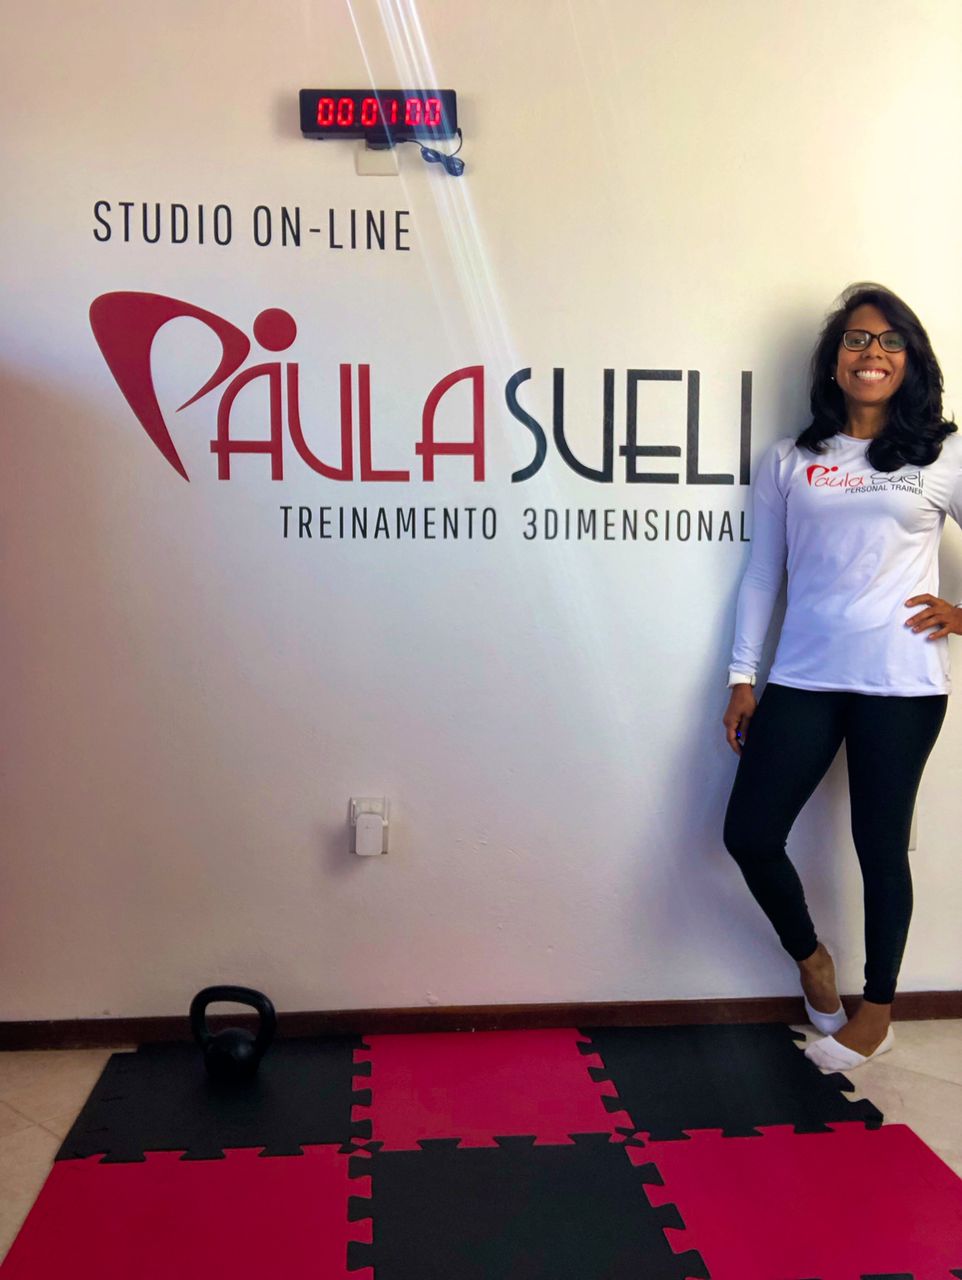 Paula Sueli: a personal trainer oferece o treino tridimensional online